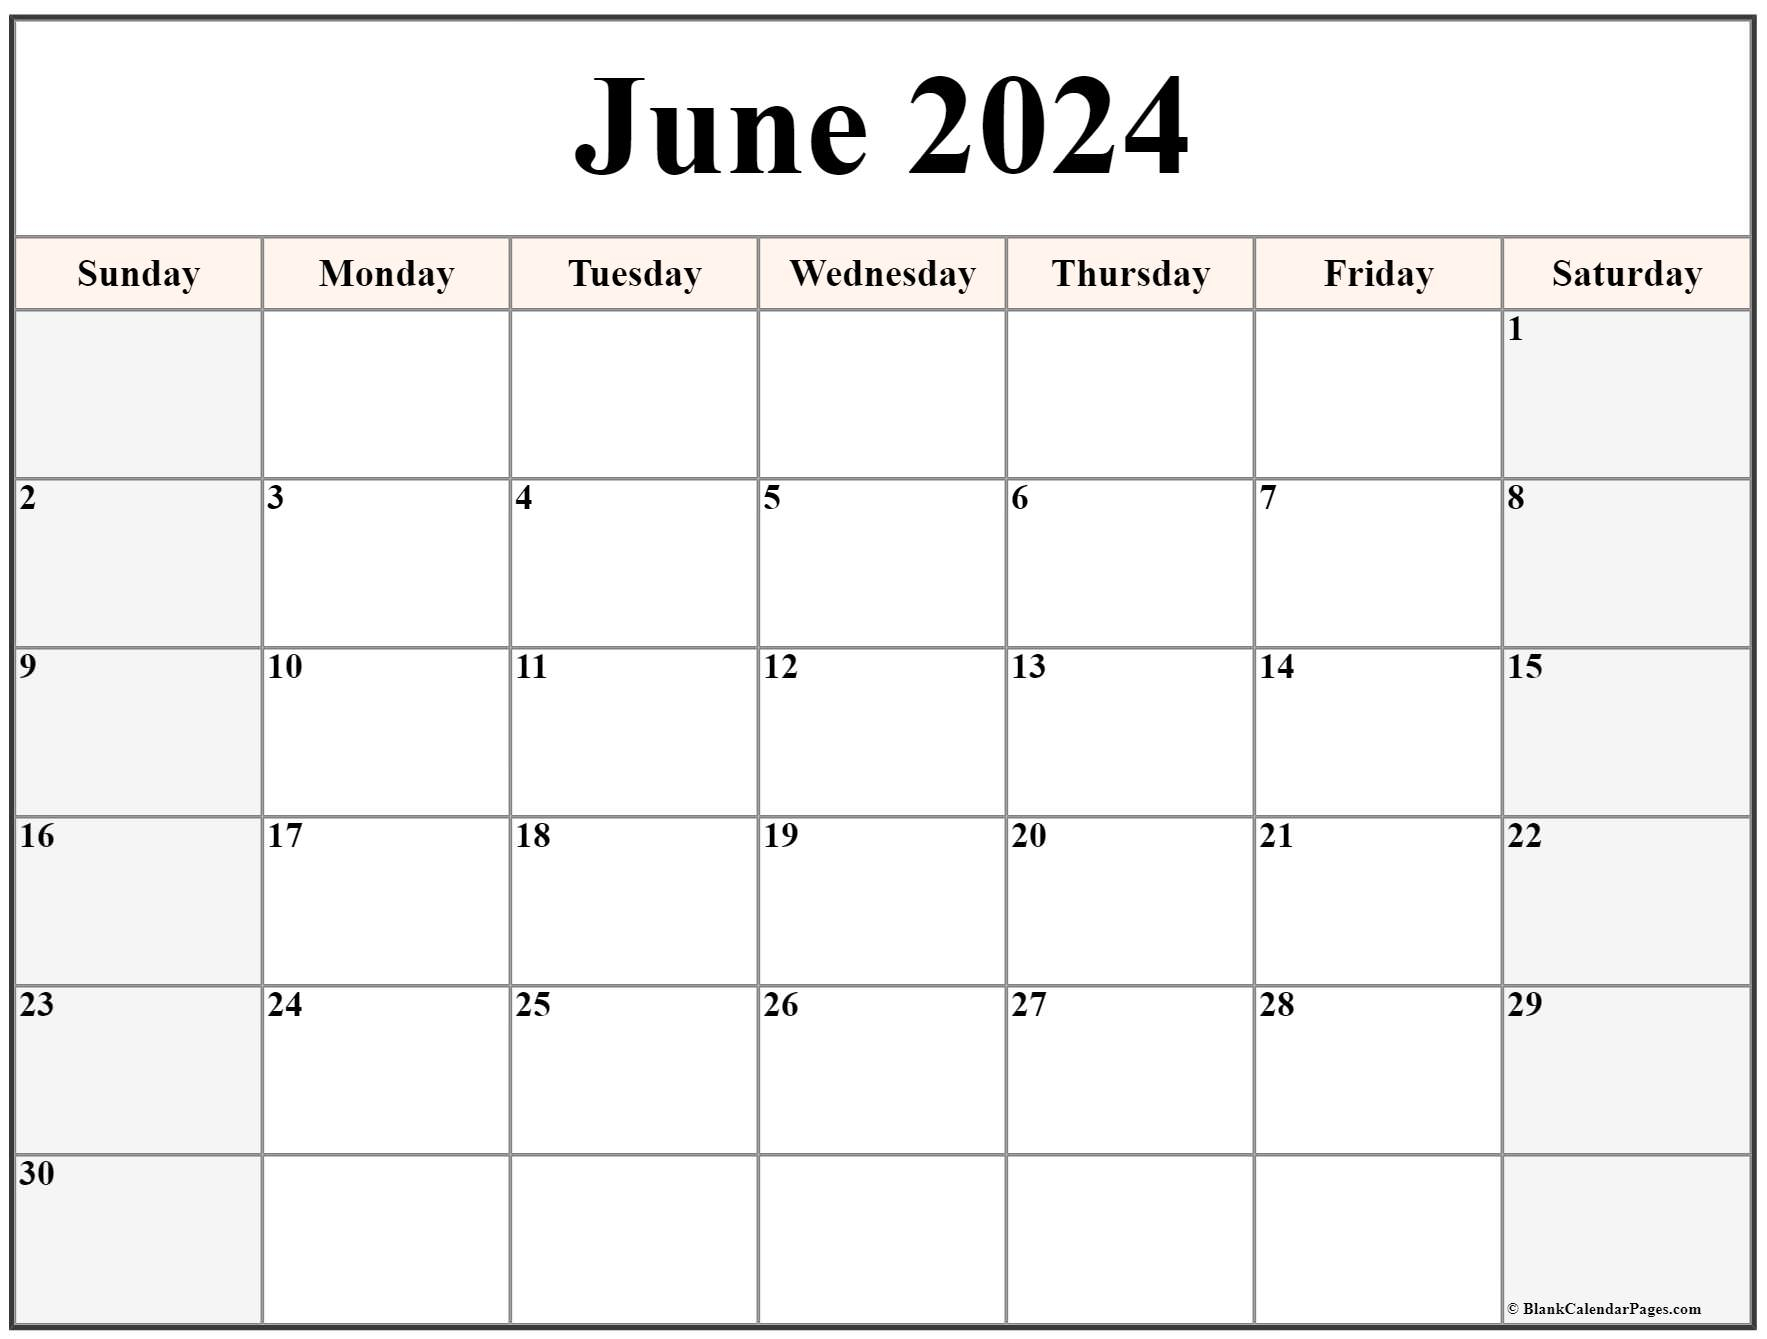 June 2024 Calendar | Free Printable Calendar for Calendar 2024 June Printable Free